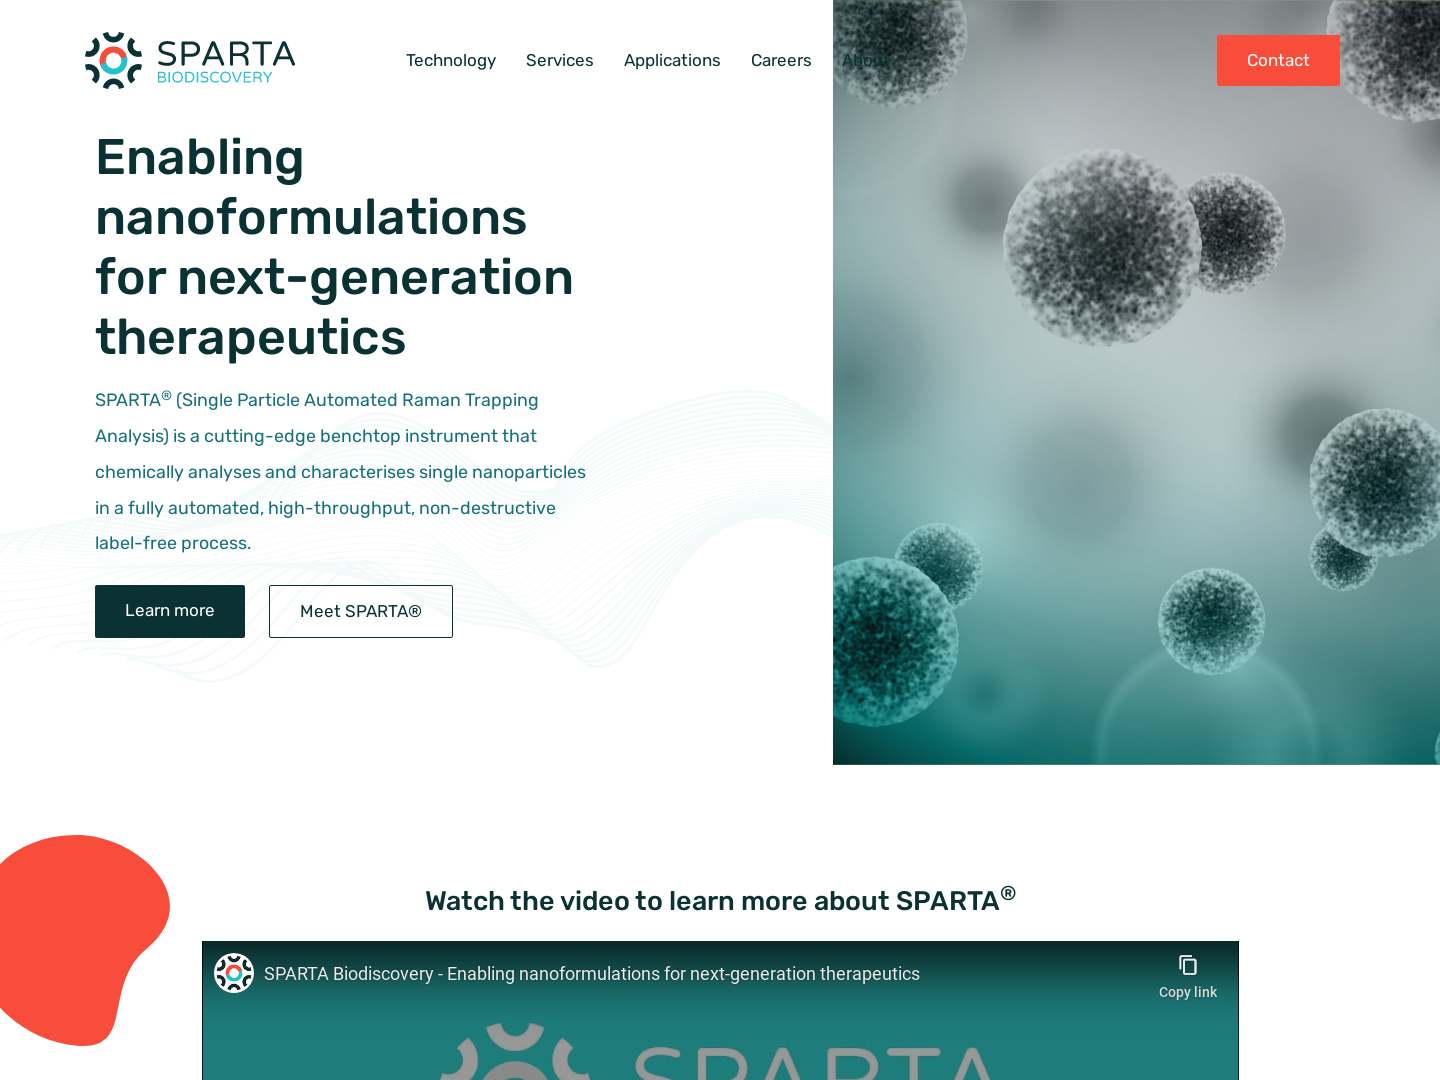 Sparta Biodiscovery and Sartorius Partner to Accelerate Nanoparticle Development